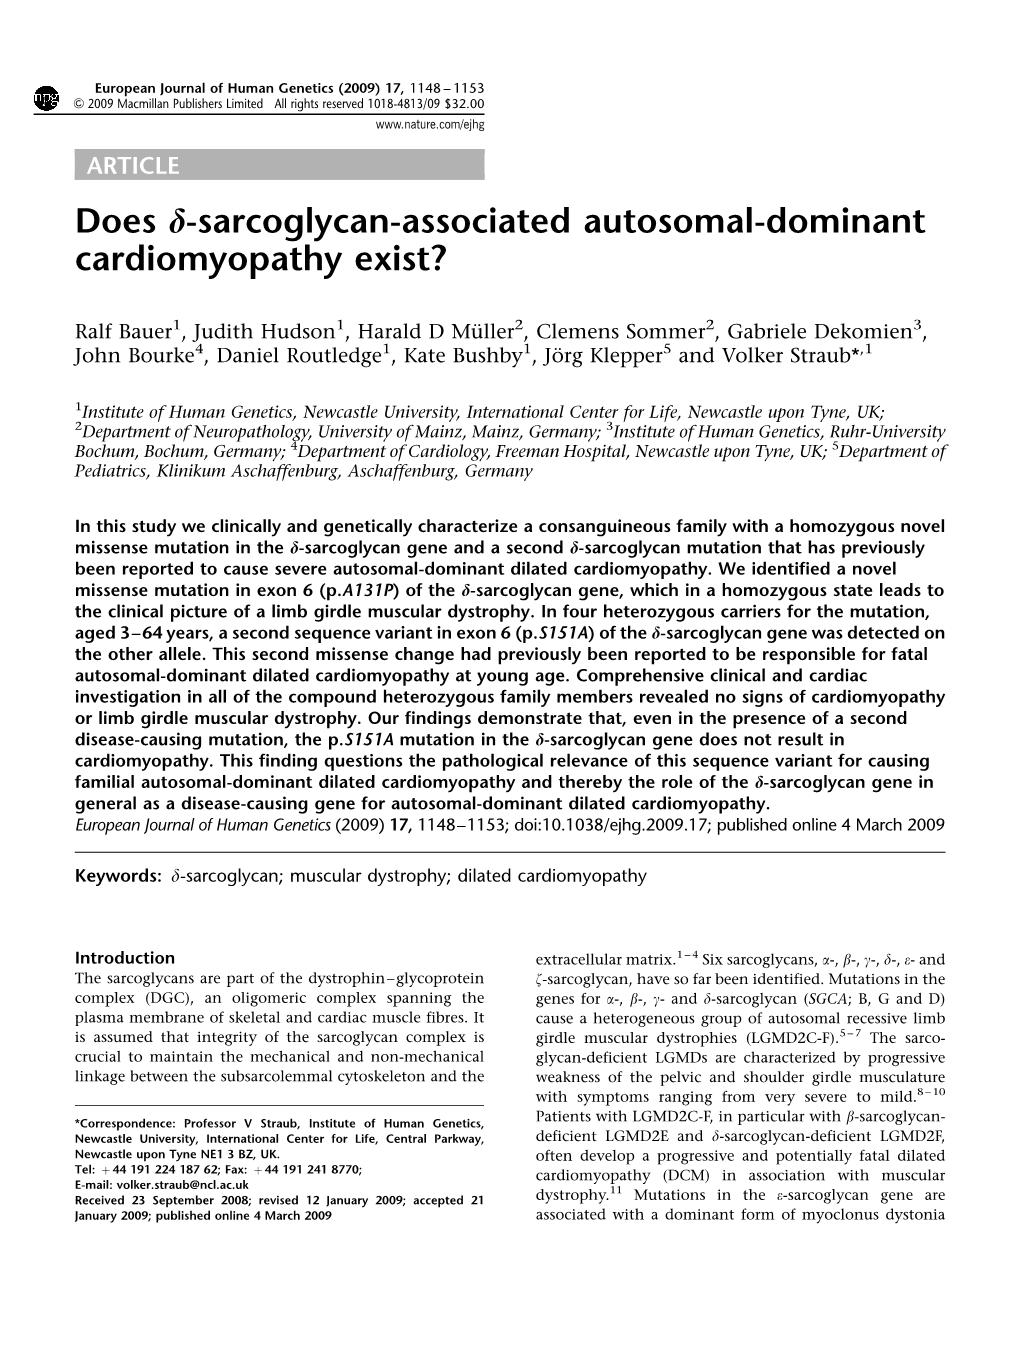 Sarcoglycan-Associated Autosomal-Dominant Cardiomyopathy Exist&Quest